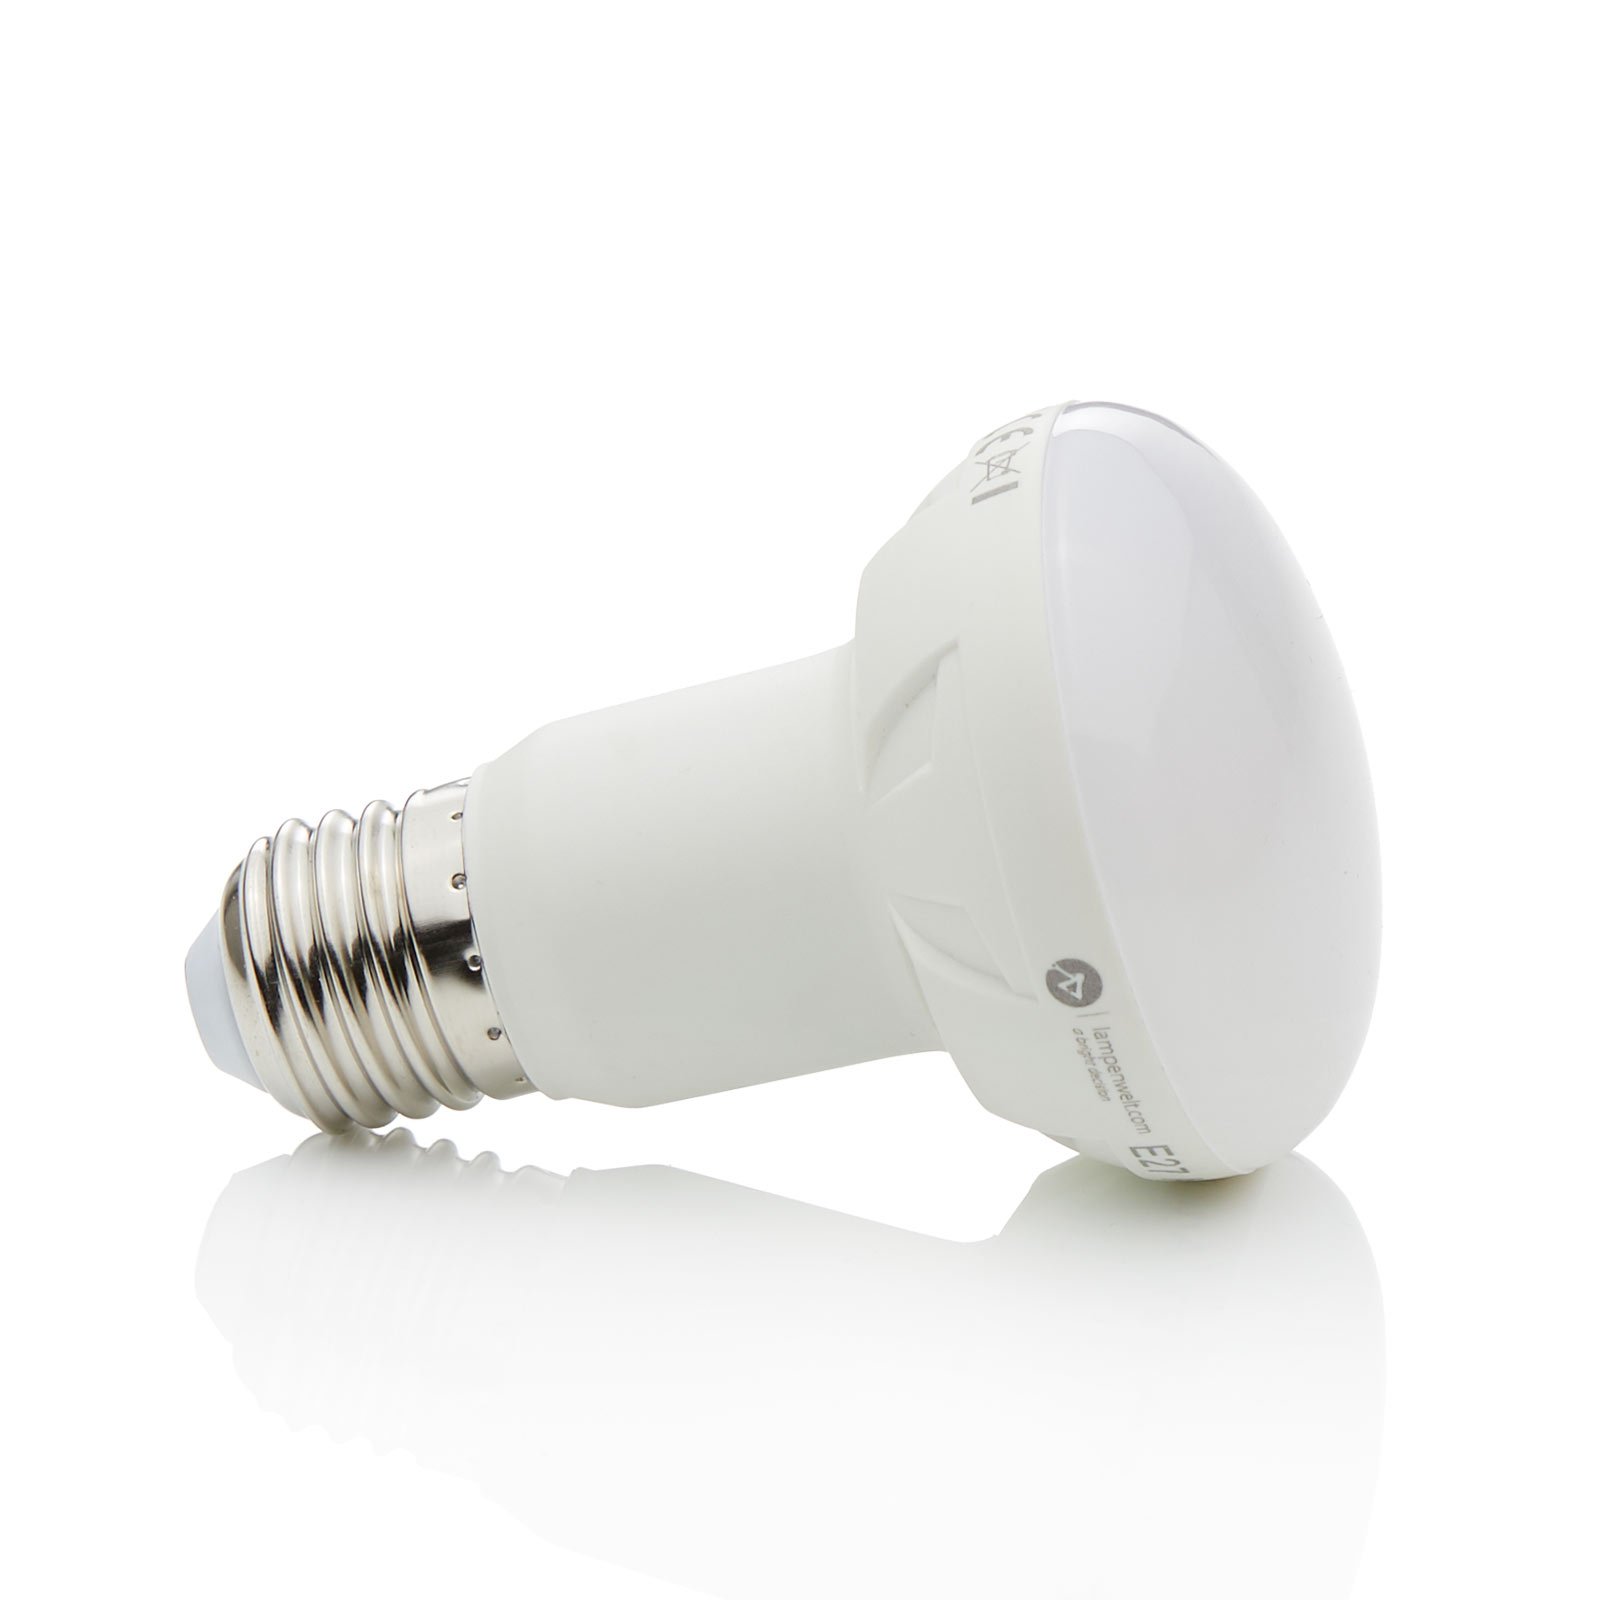 E27 11W 830 reflector LED bulb R63 warm white 120°